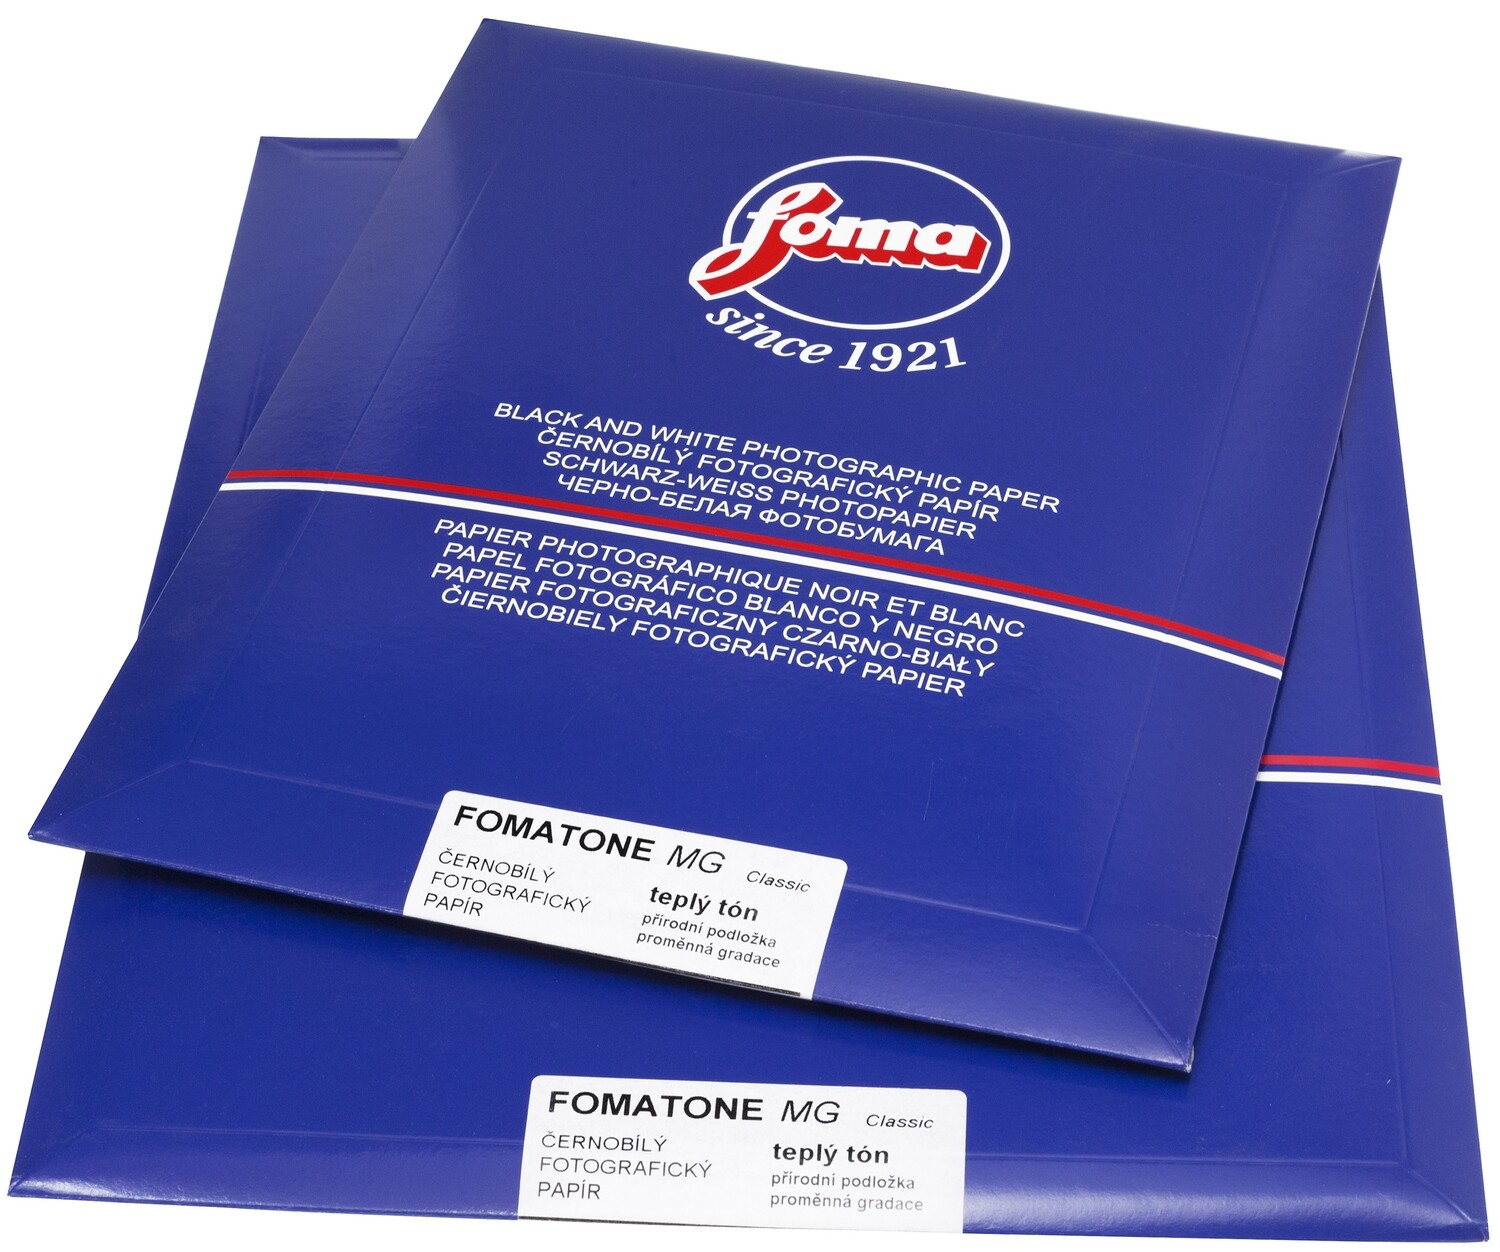 FOMA Fomatone MG 131 Classic warmtone Glossy (Baryt)  24.0x30.5cm  / 9.5x12 Inch - 50 sheets - Gradation Variabel